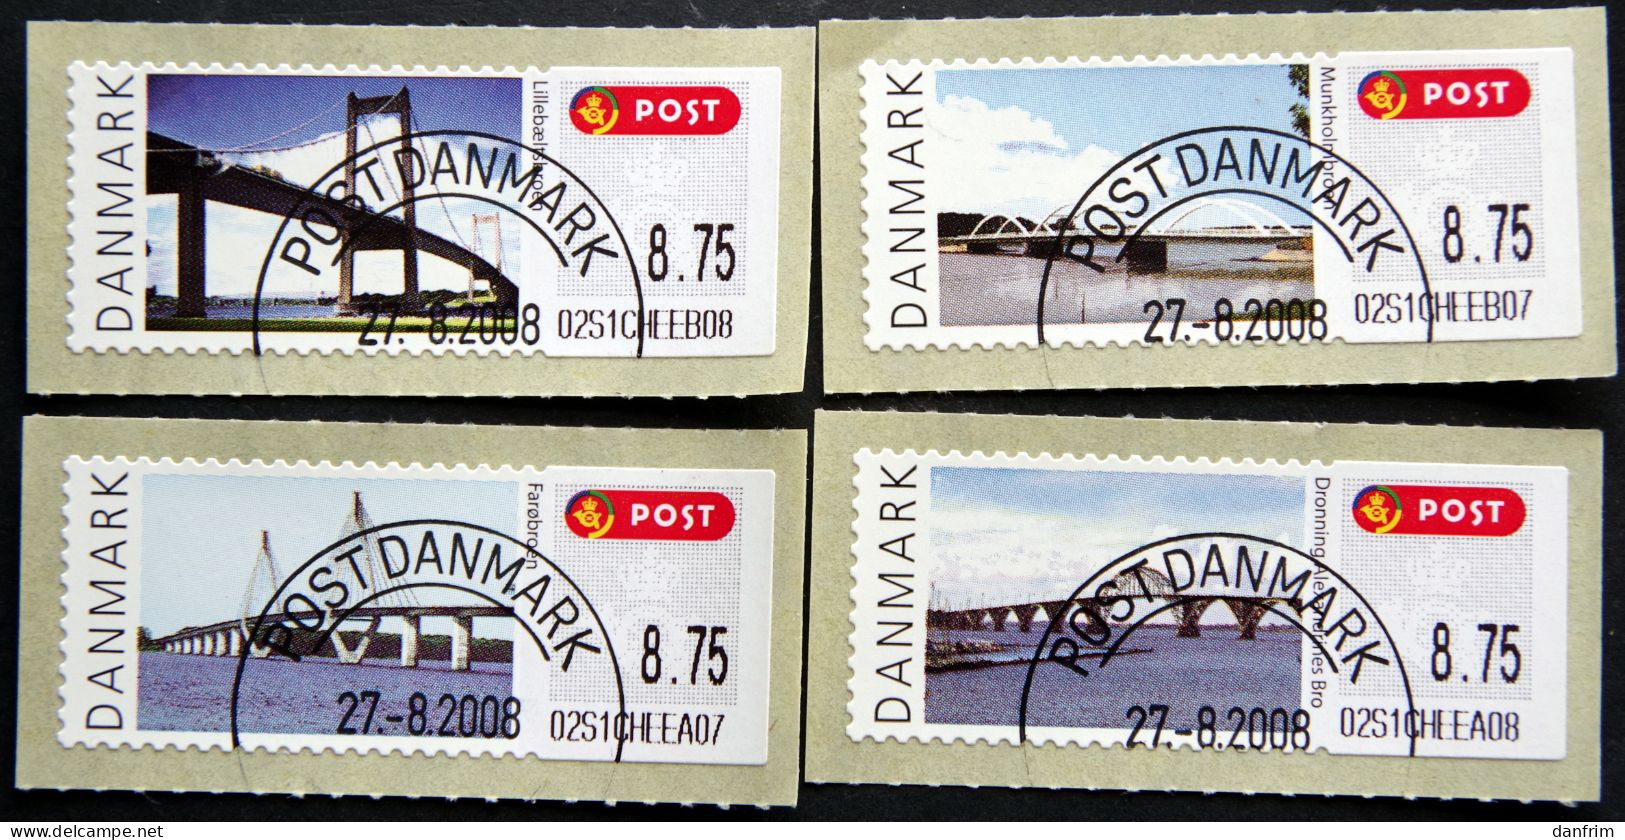 Denmark 2008 MiNr.42-45 (O) ( Lot L 66 ) ATM Franking Labels - Machine Labels [ATM]